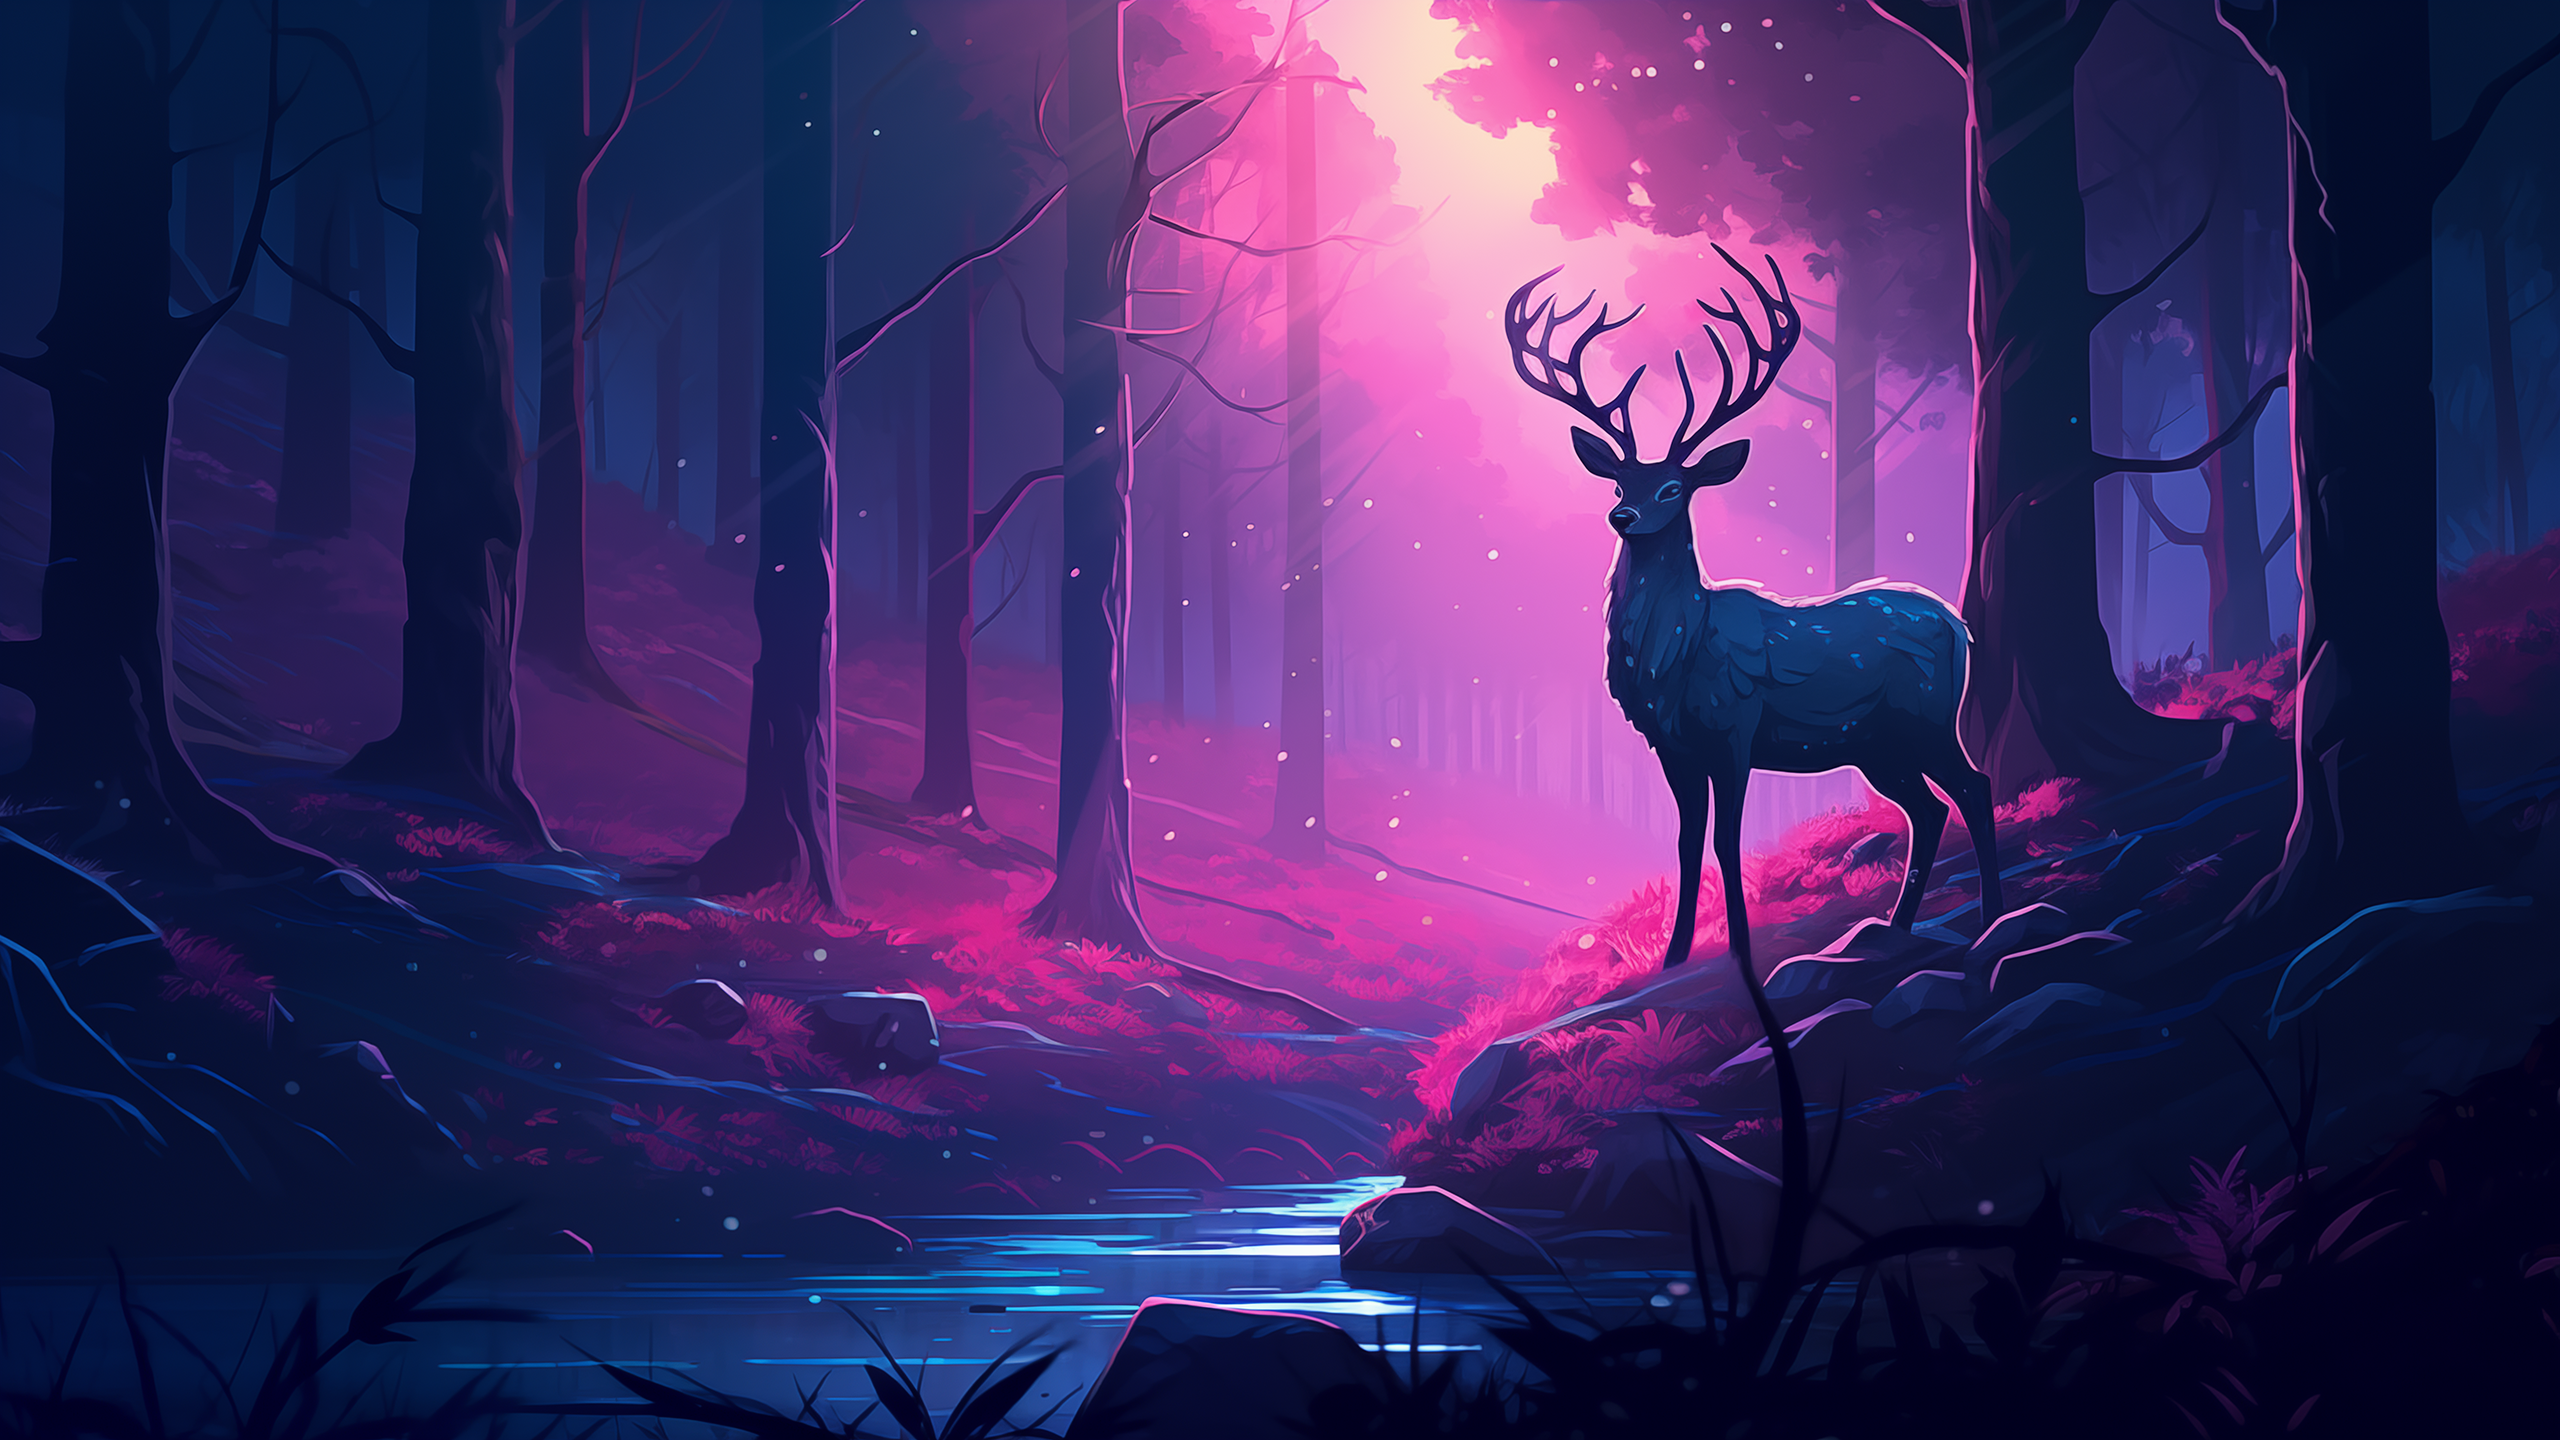 Night Purple Deer Forest River Warm Colors Pink Landscape Digital Art 2560x1440